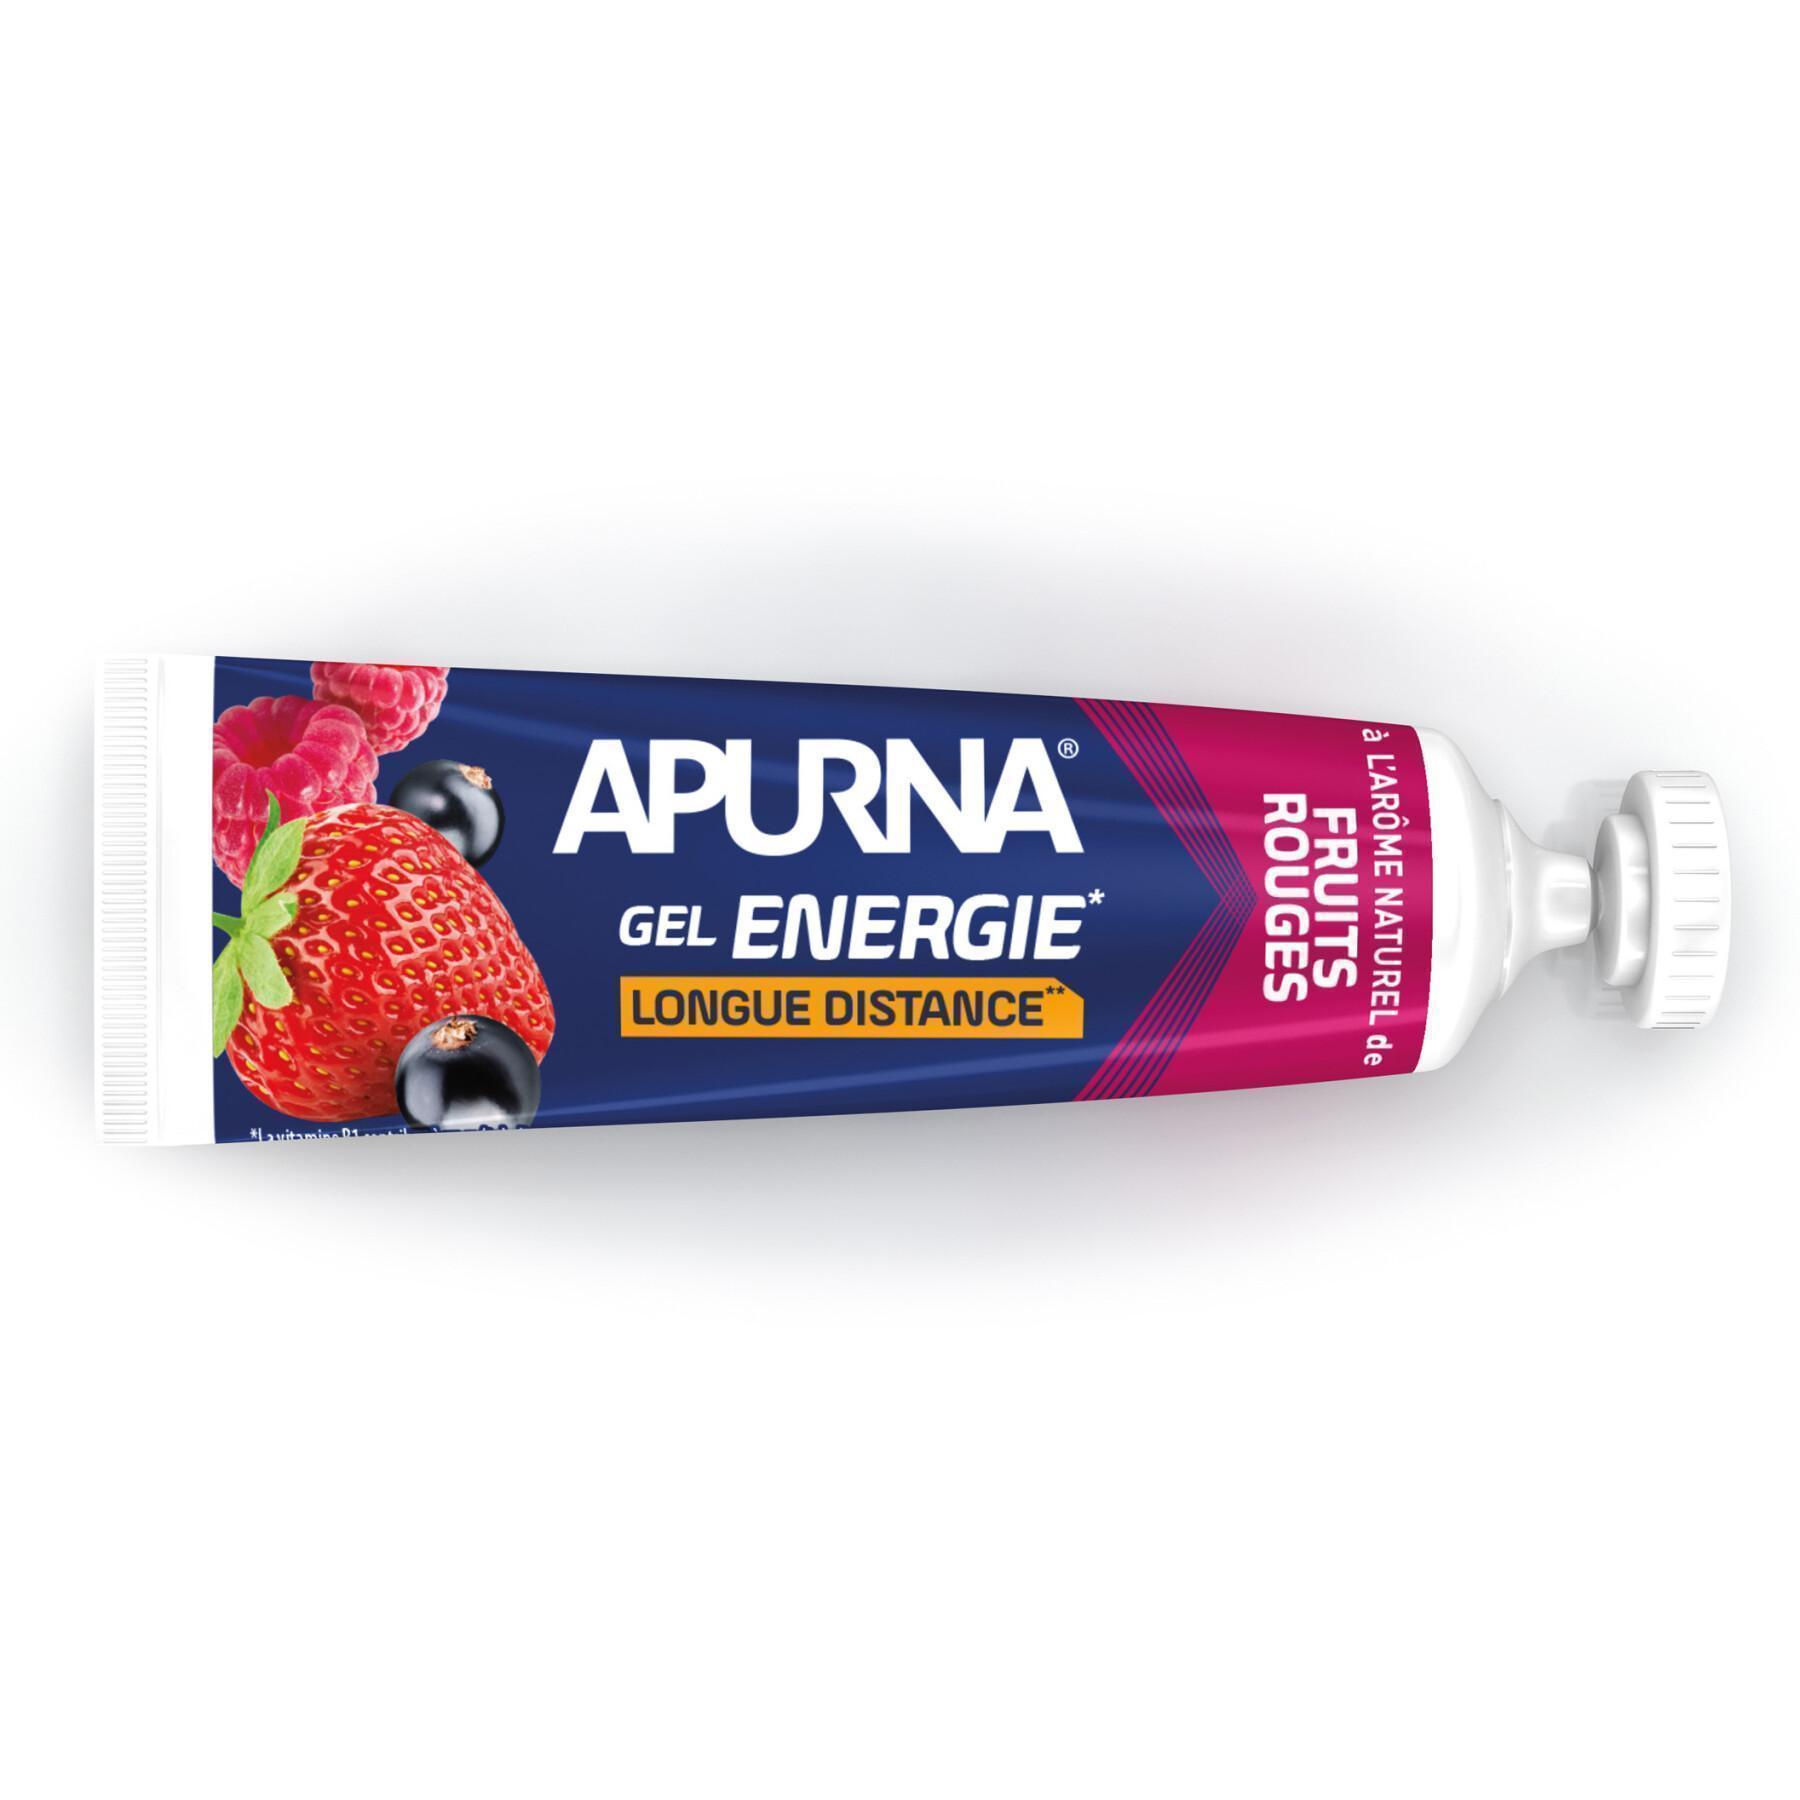 Long-distance red fruit energy gel+2h effort Apurna